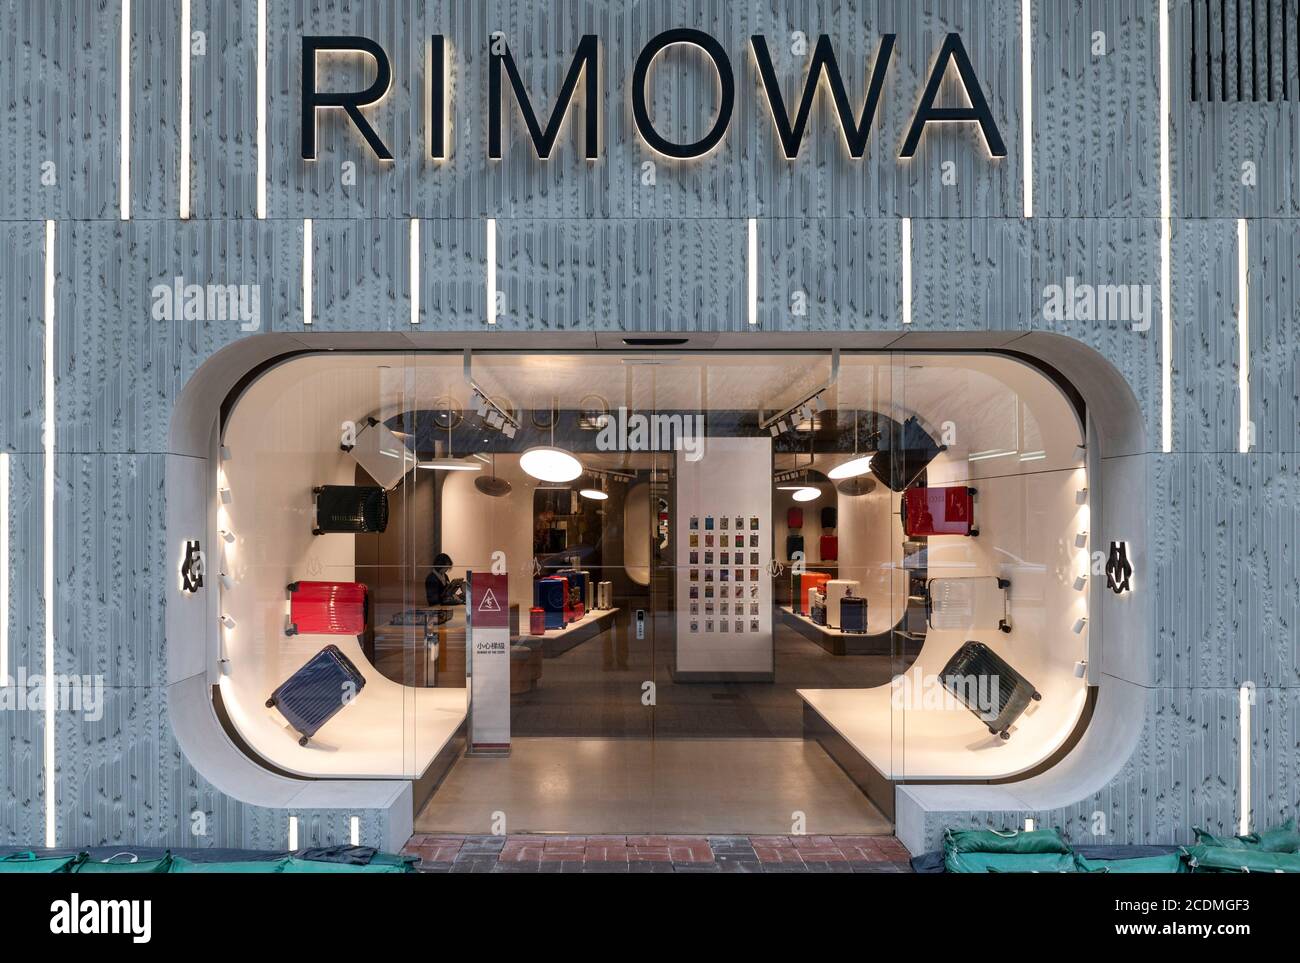 rimowa hk store